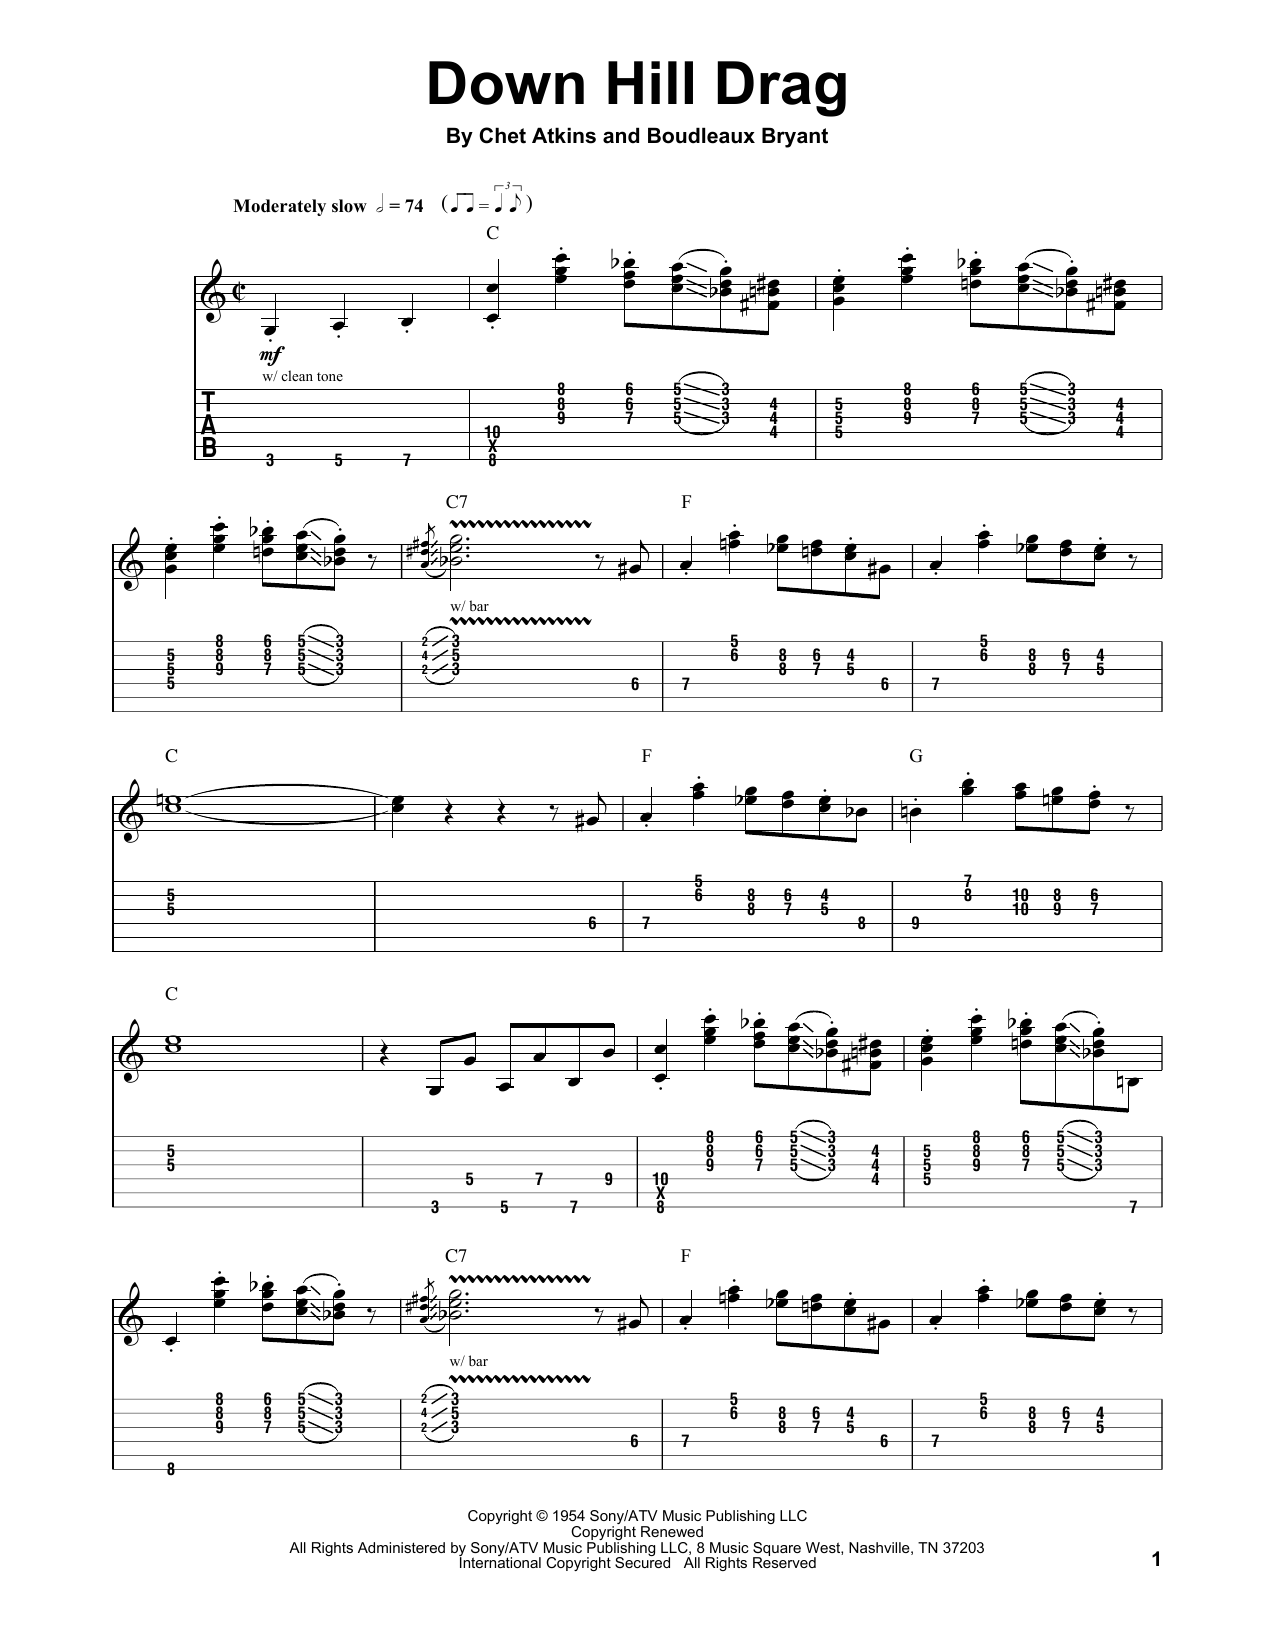 Chet Atkins Down Hill Drag Sheet Music Notes & Chords for Guitar Tab Play-Along - Download or Print PDF